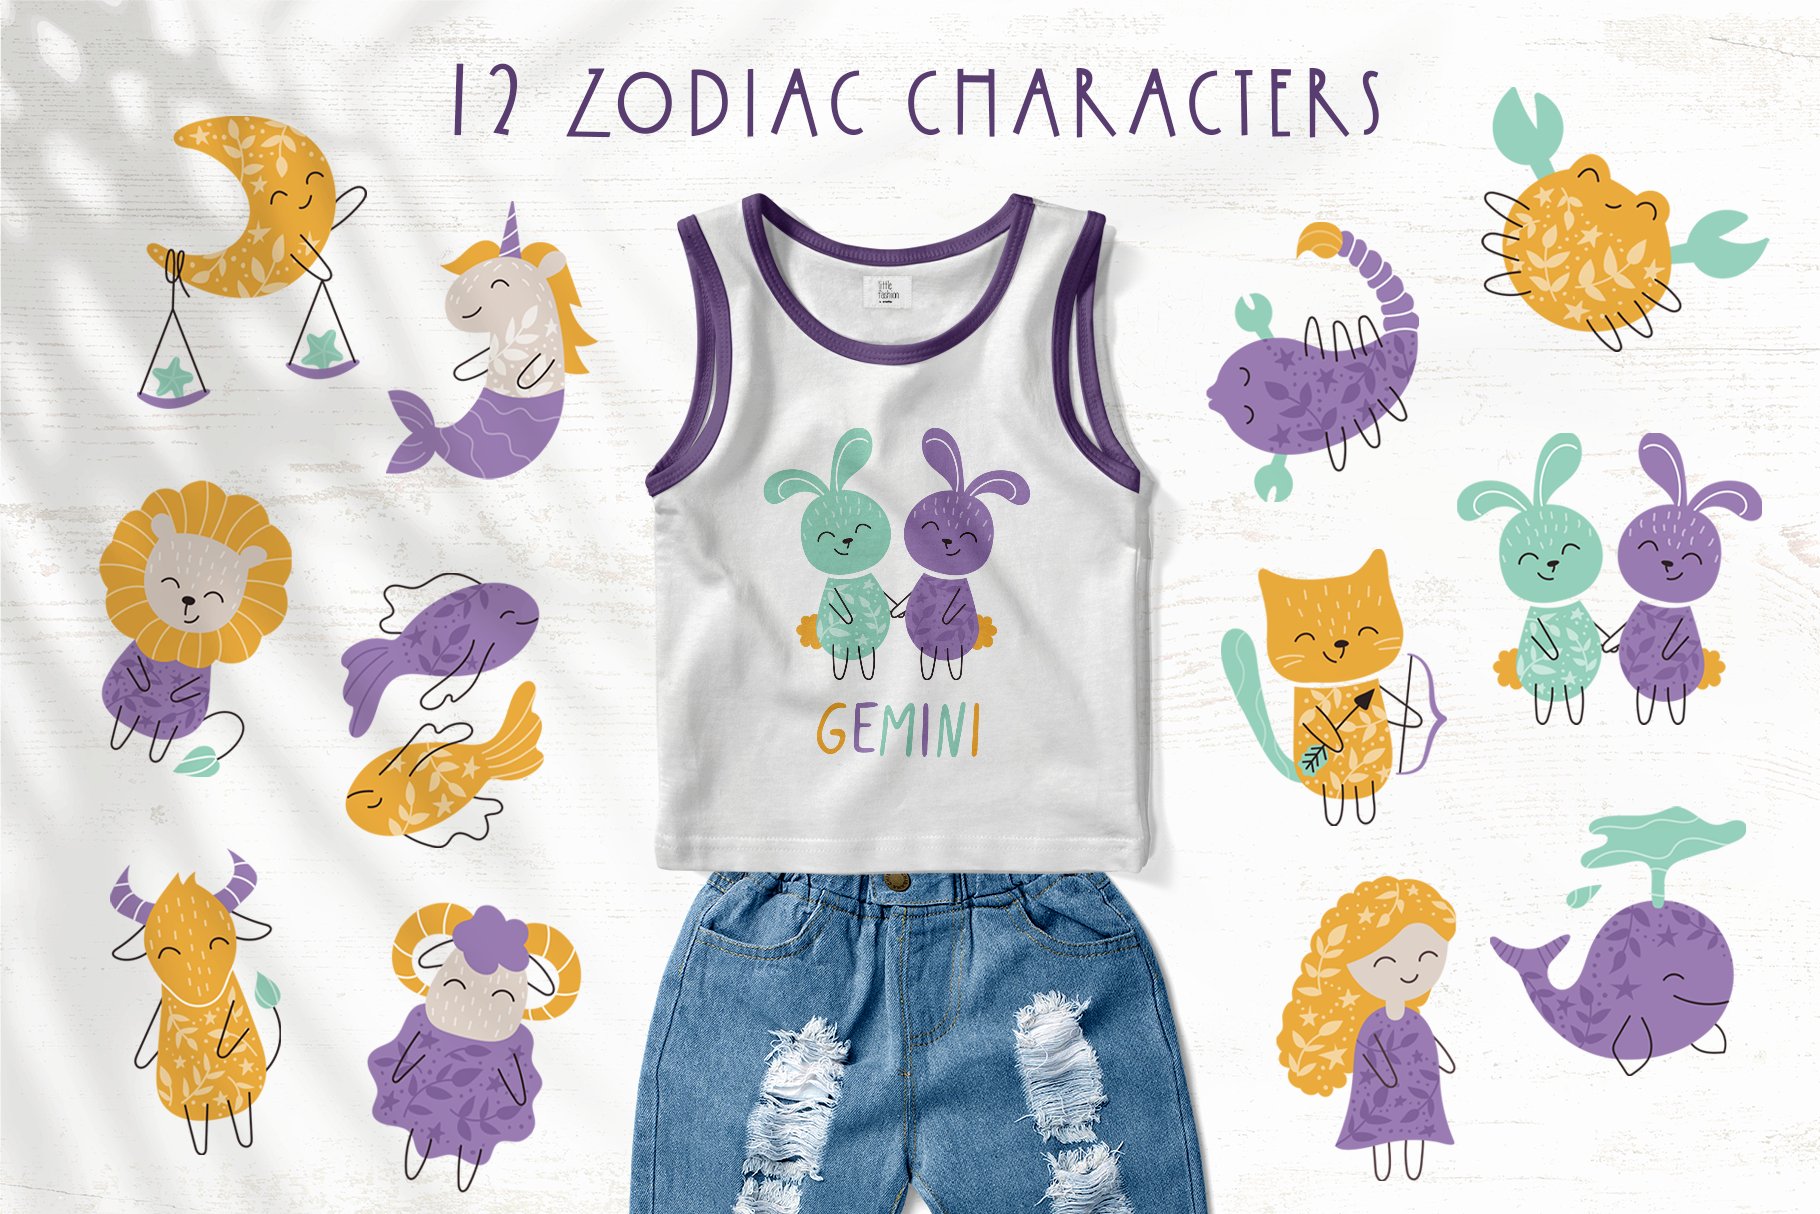 Twelve zodiac characters.